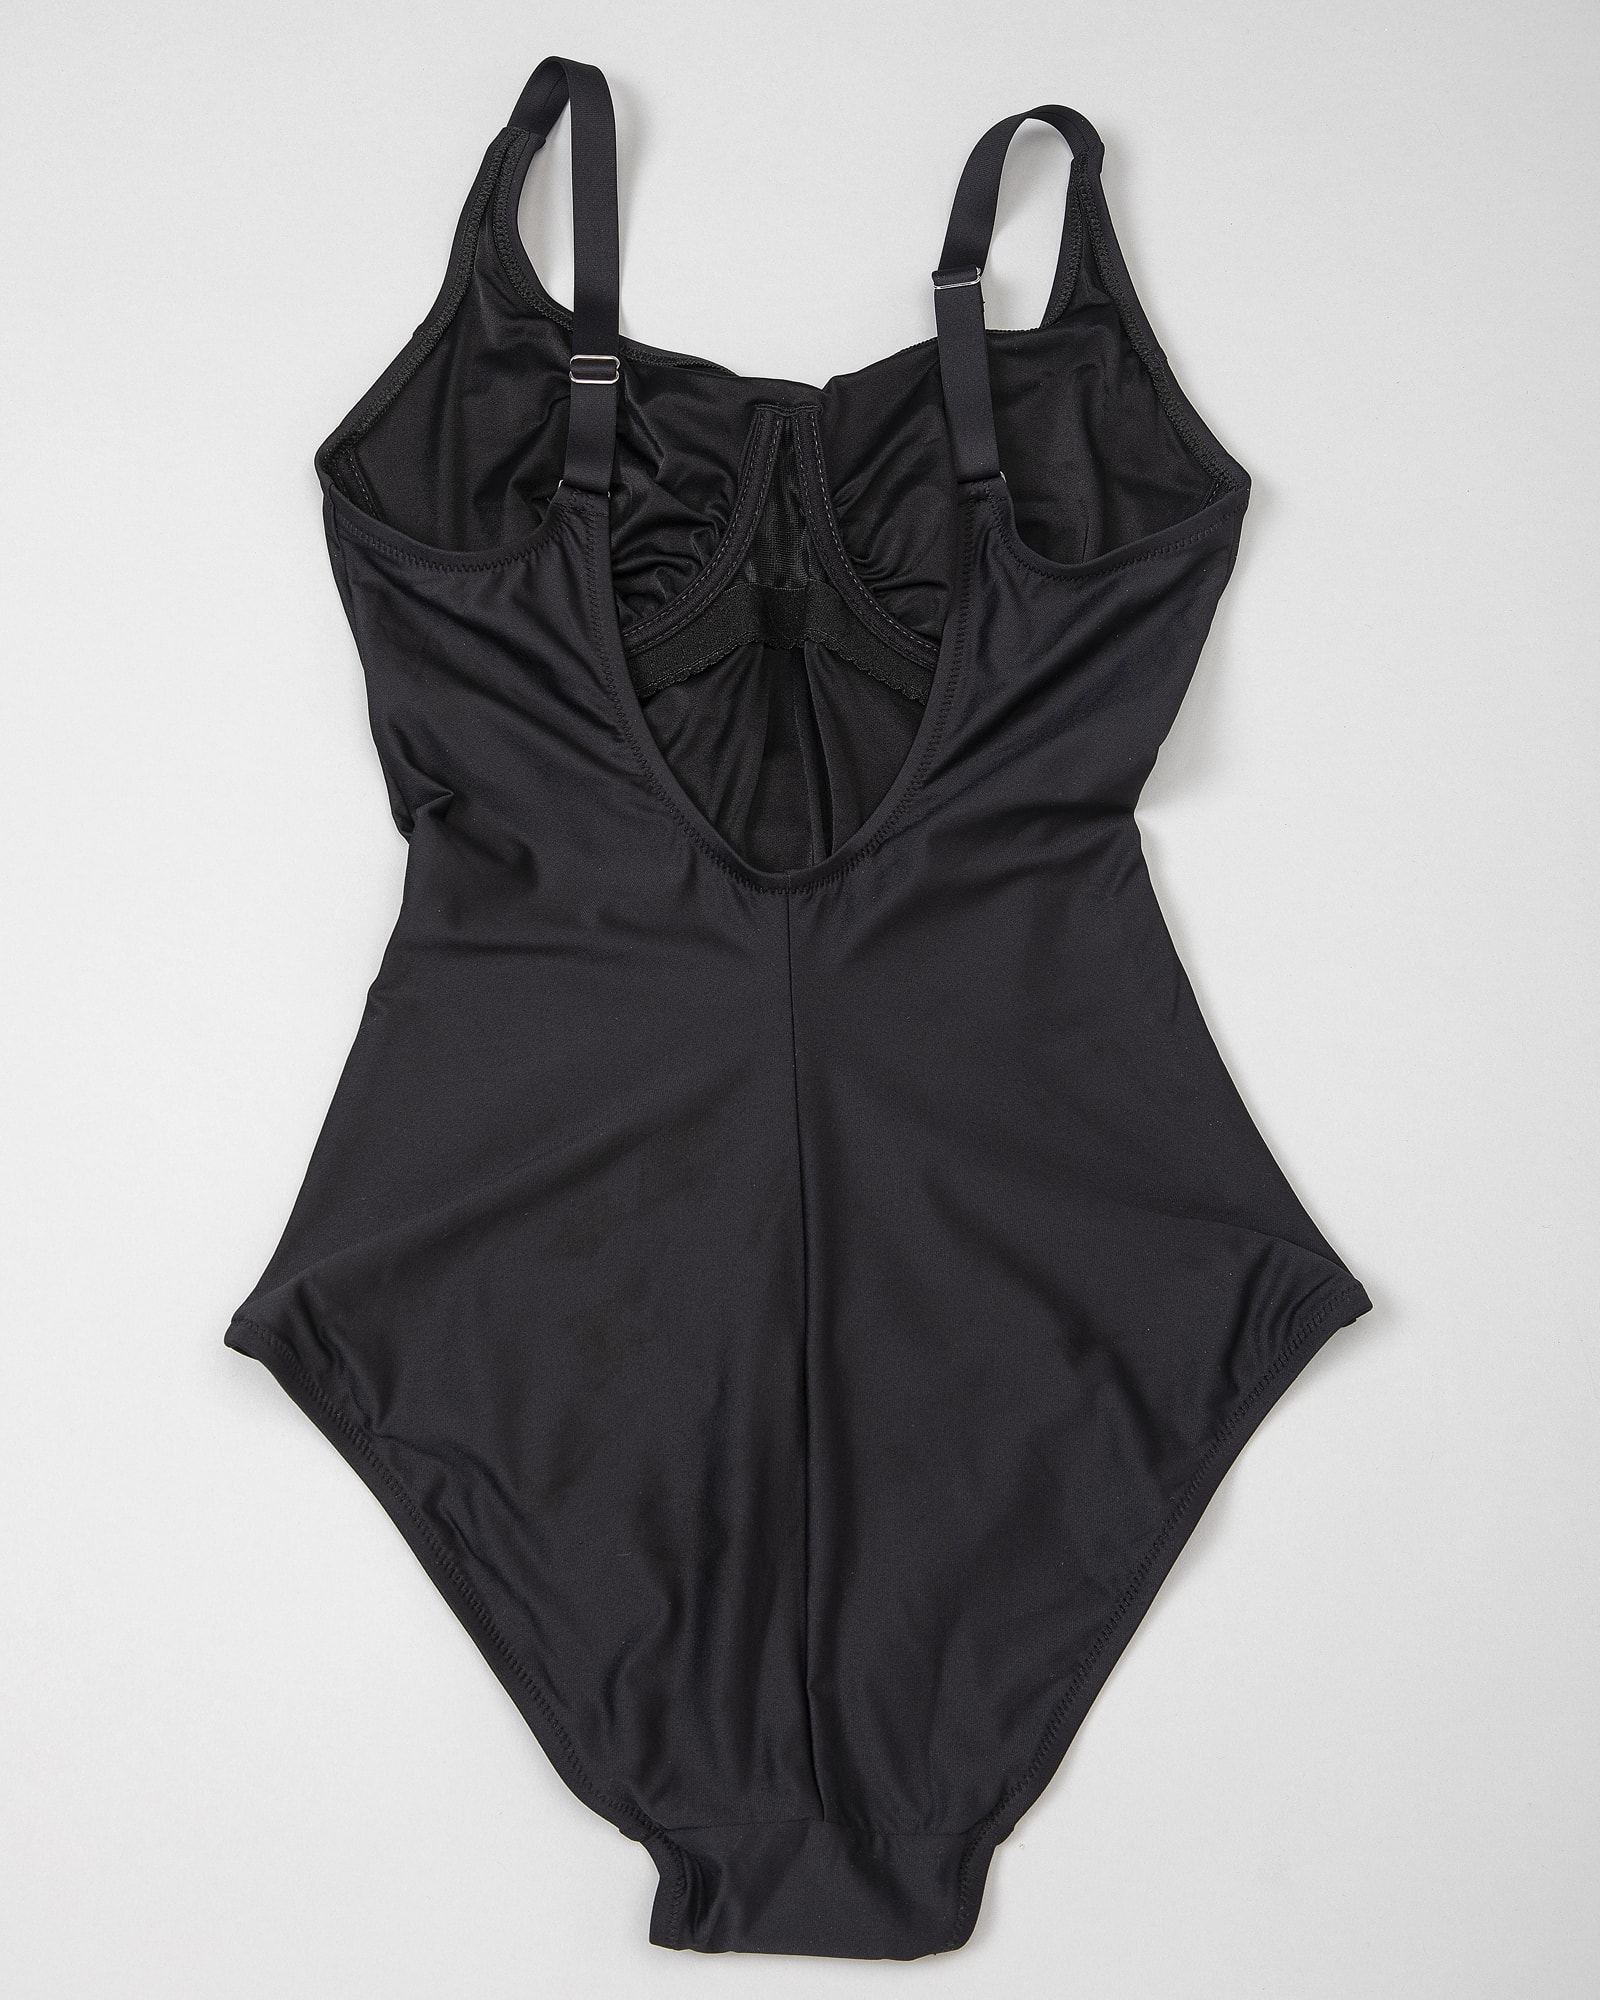 Antigel L'estivale Chic Swimsuit - Black fba6216-0005 c